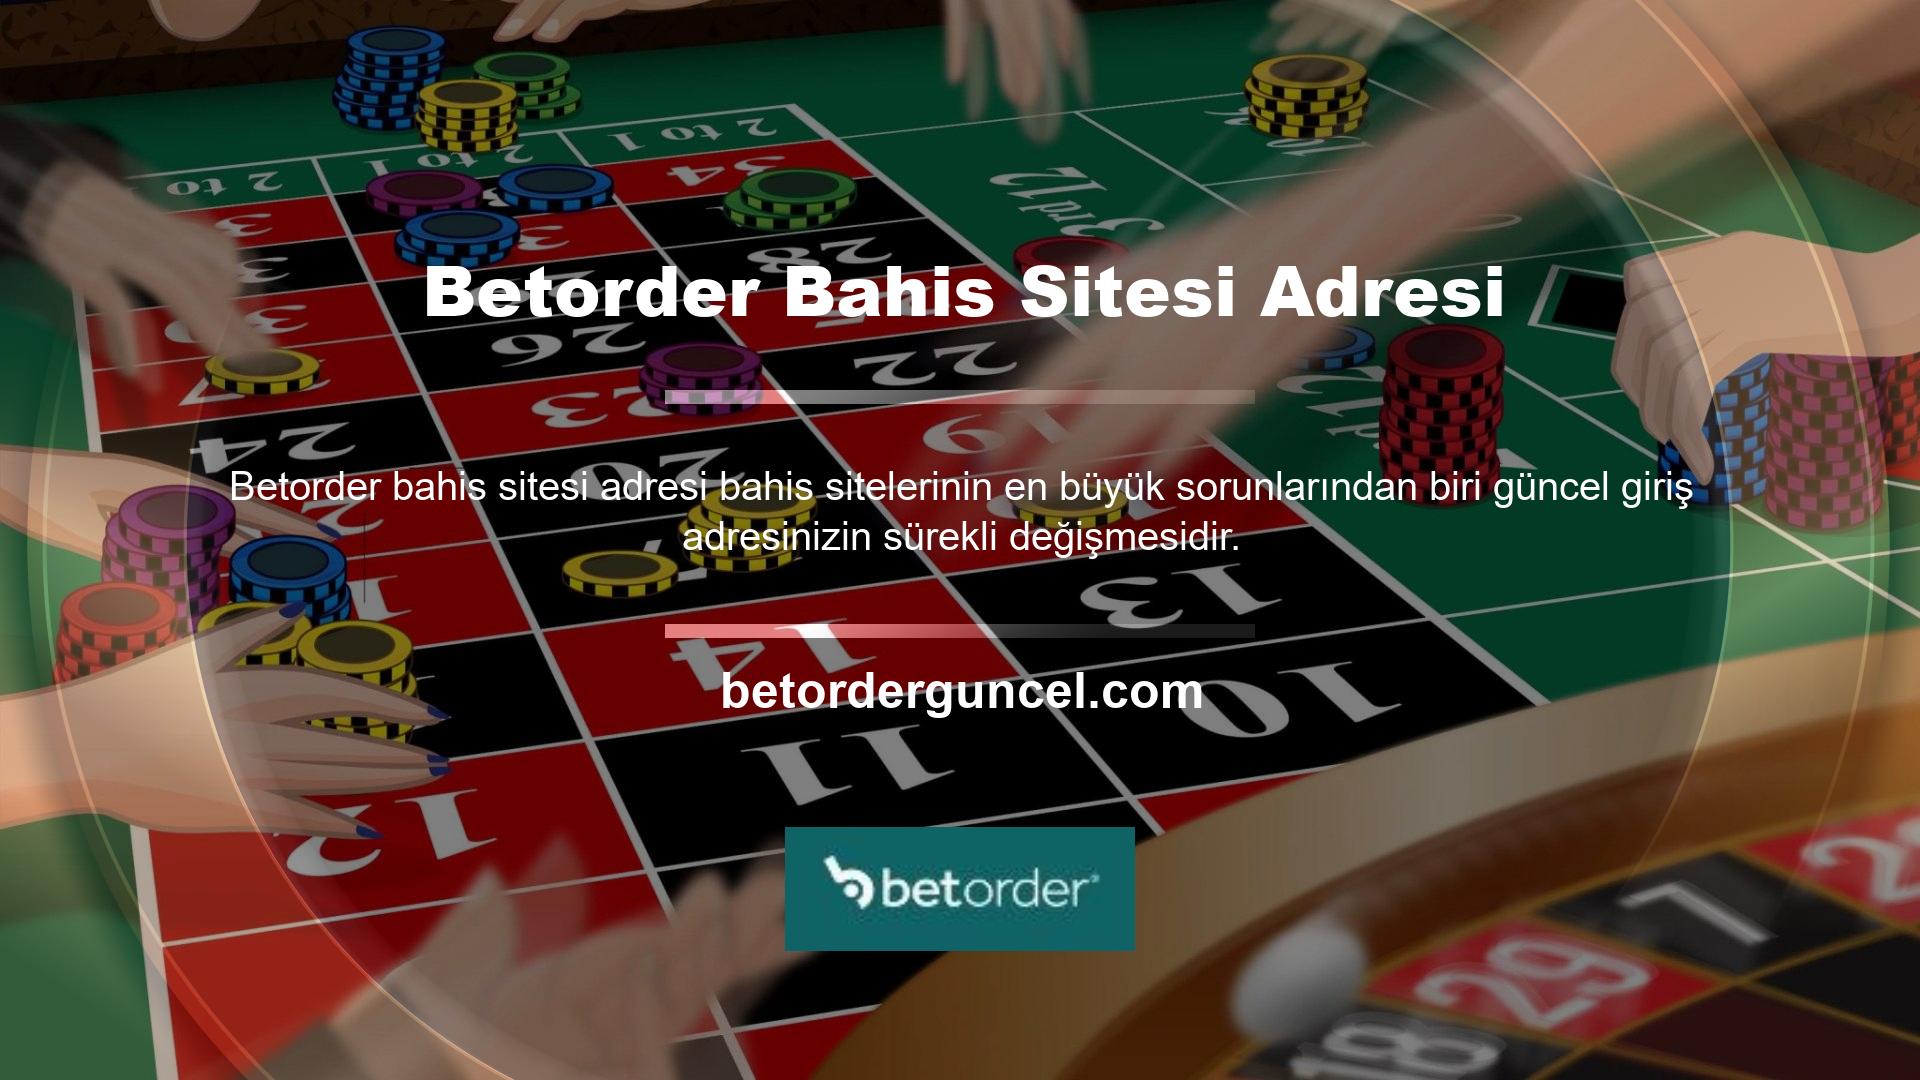 Betorder 7/24 hizmet veren bir online casino ve casino sitesidir